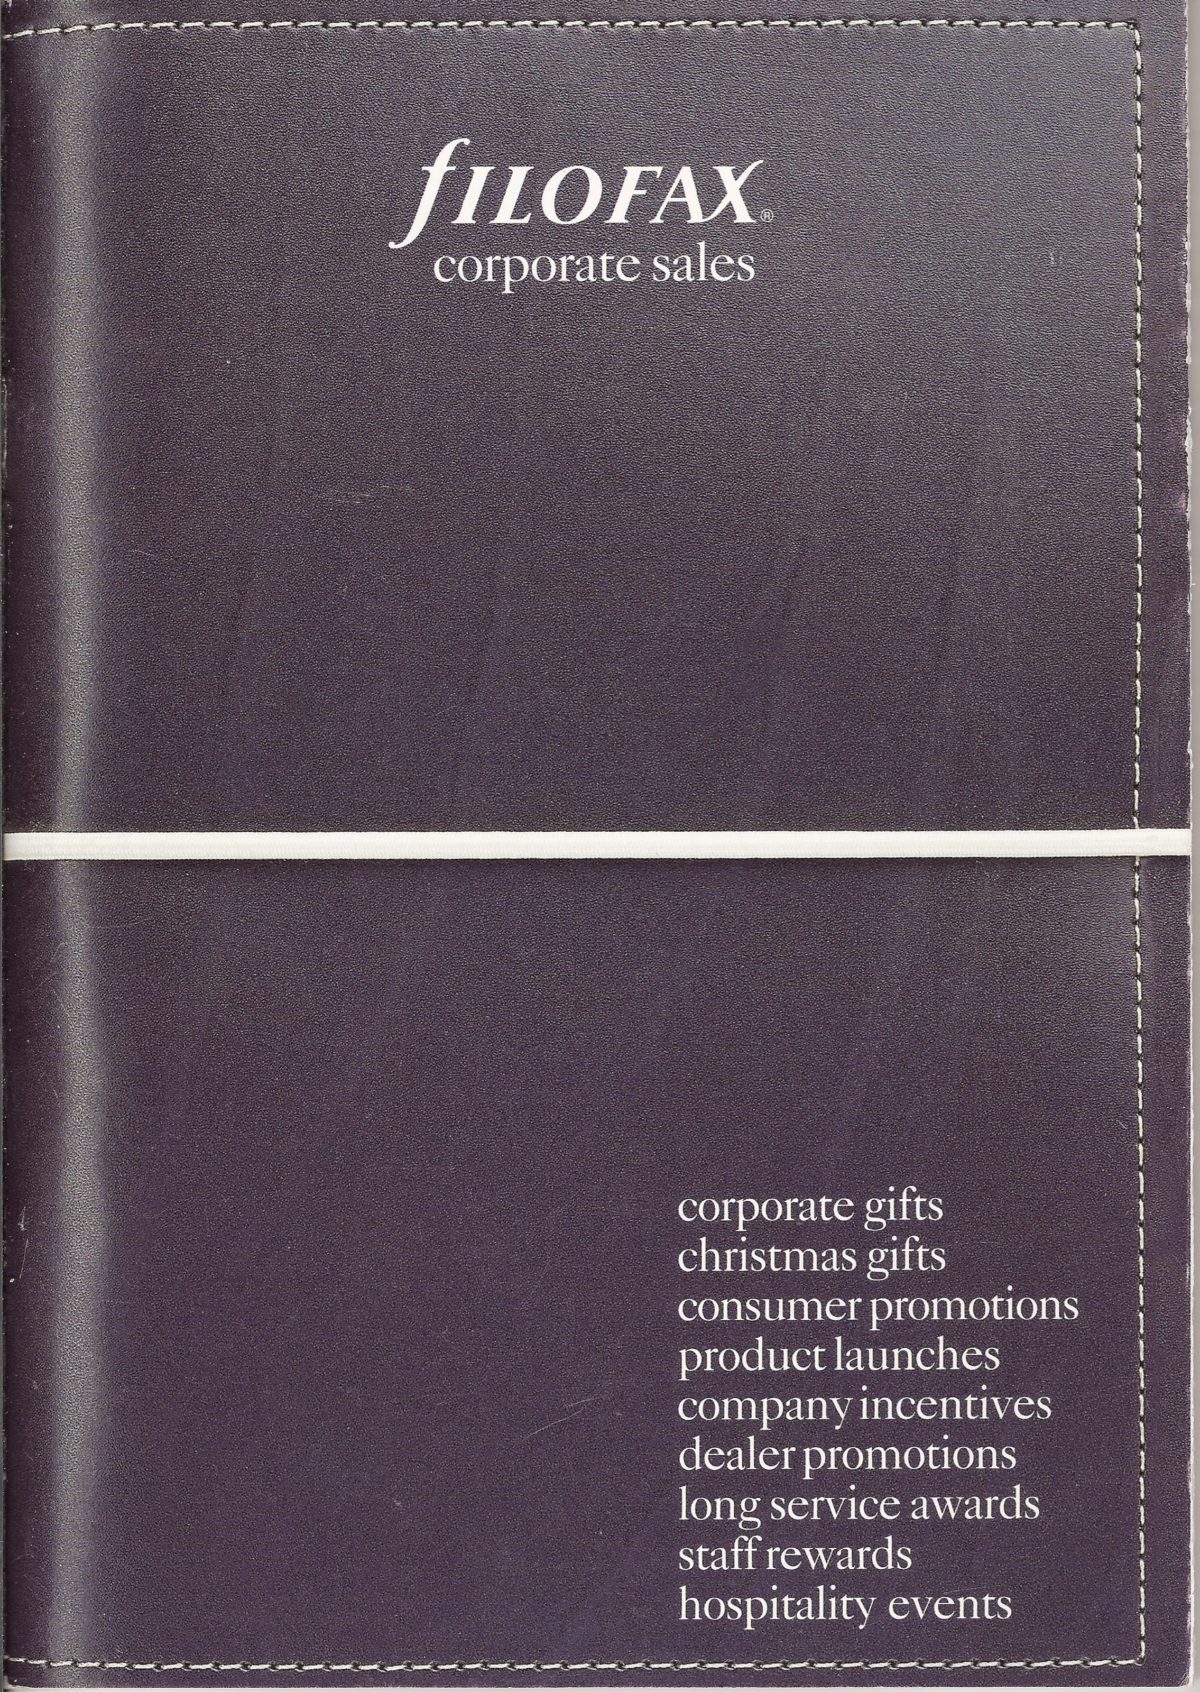 Filofax UK Corporate Sales Catalogue 2008